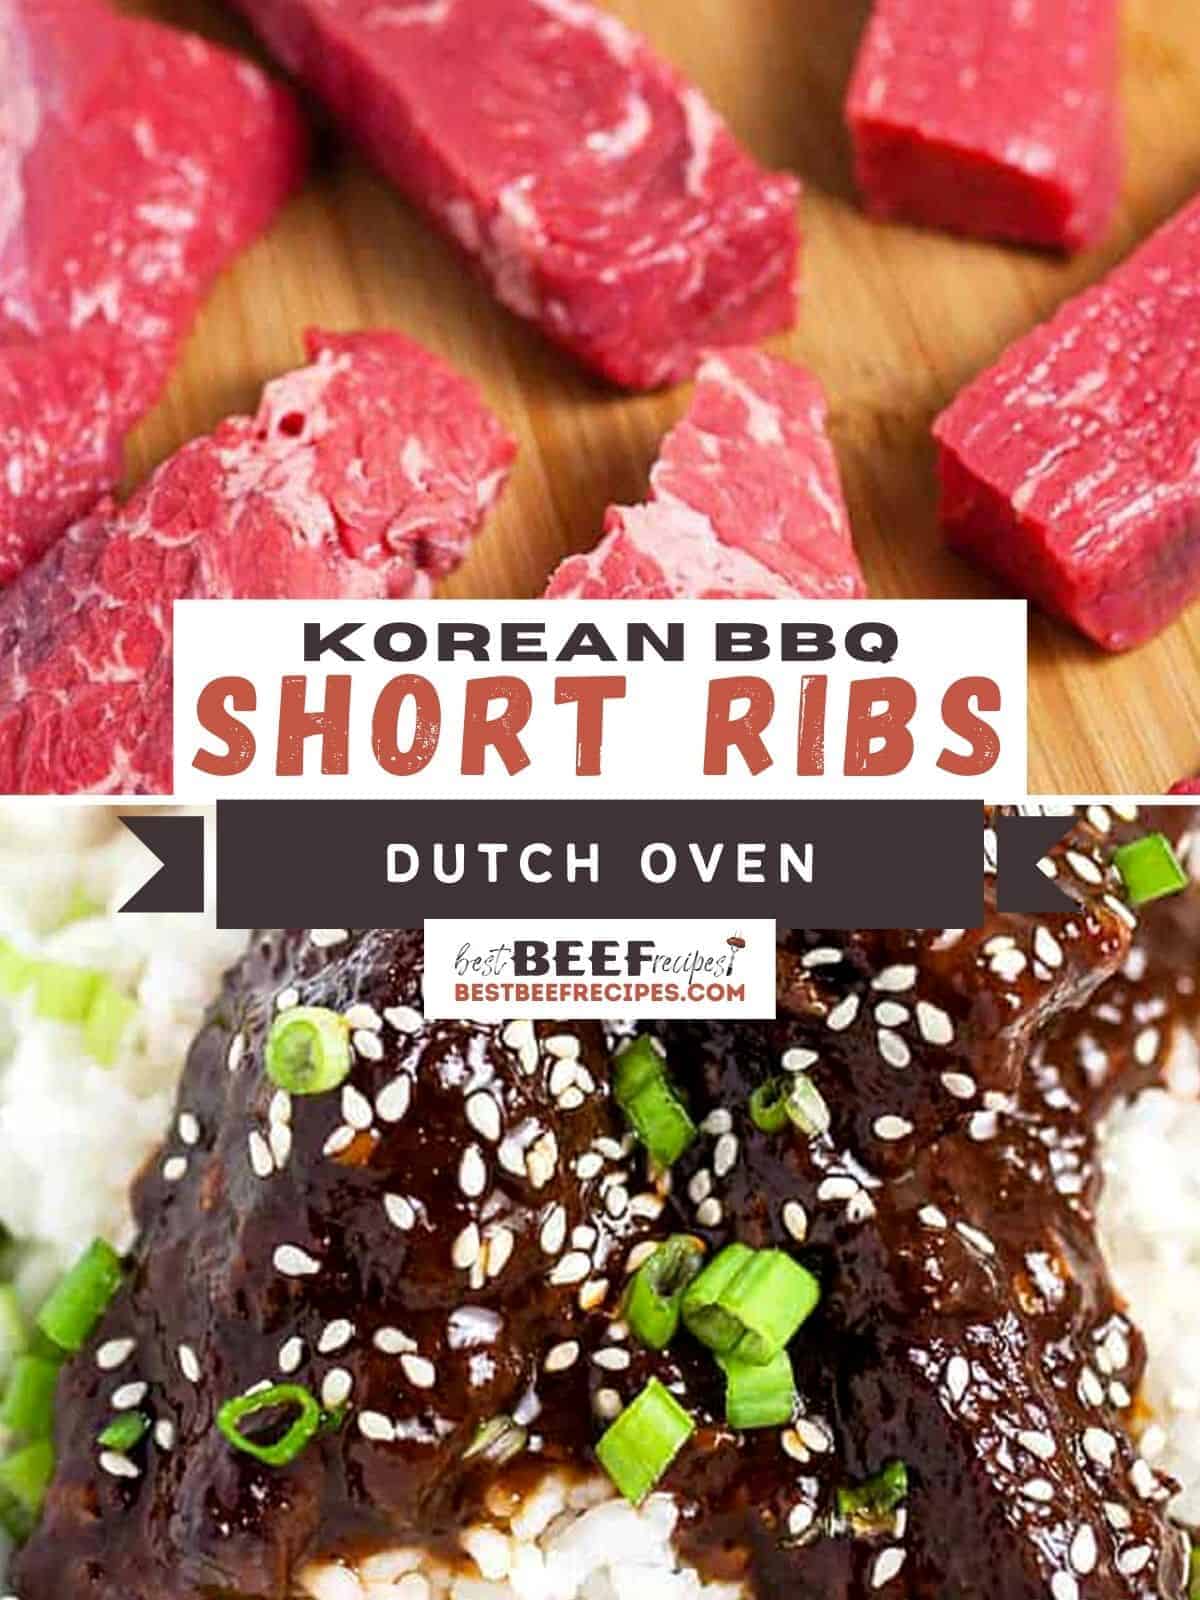 Korean short ribs cover image